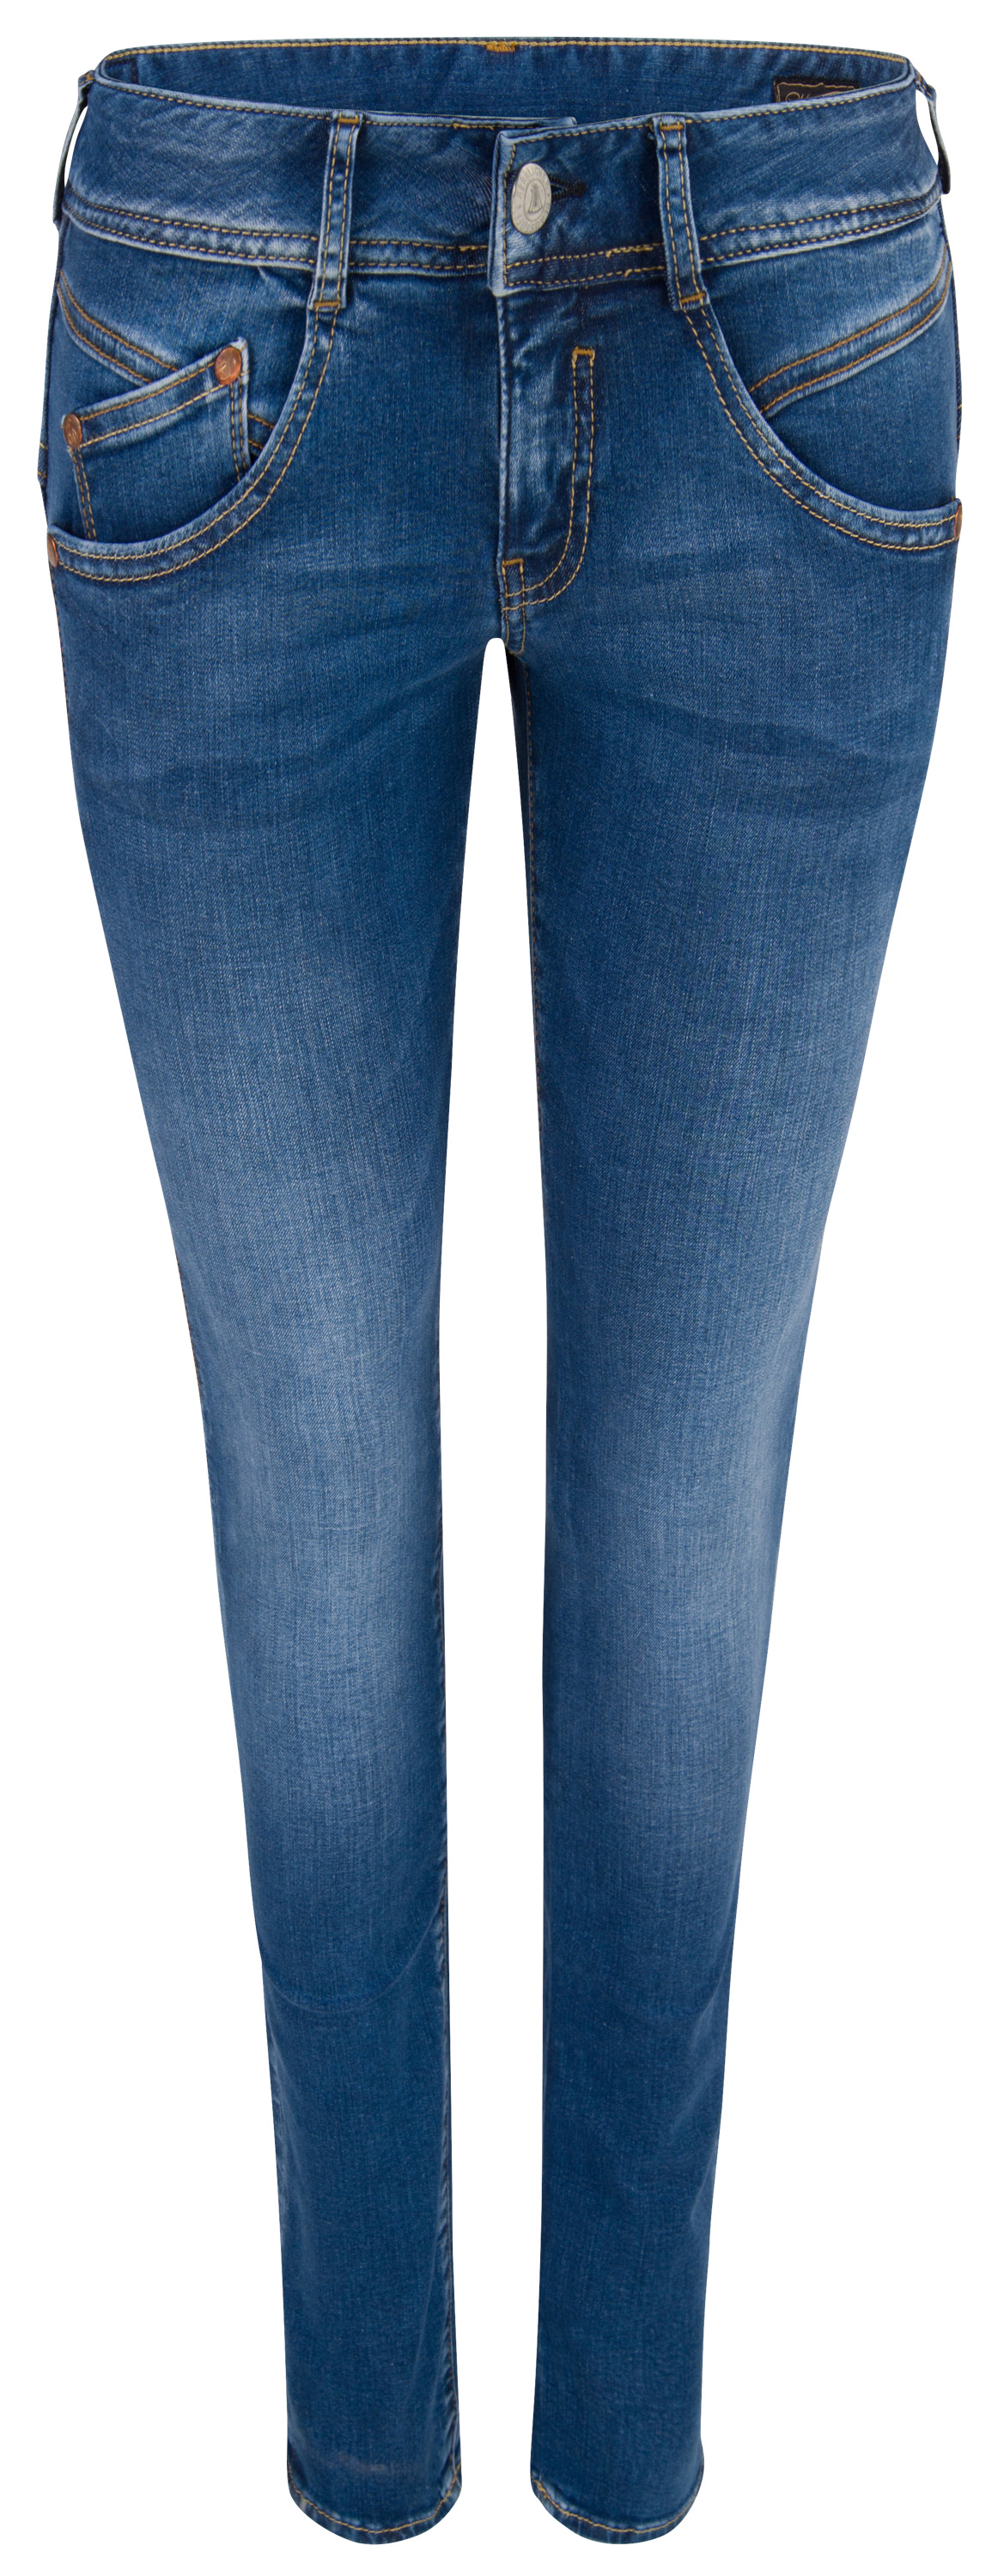 STRETCH dazzling | Slim | HERRLICHER DENIM Powerstretch Damen Jeans | GILA blue | Denim 5606-D9668-663 Jeans-Manufaktur | Herrlicher Gila Jeans